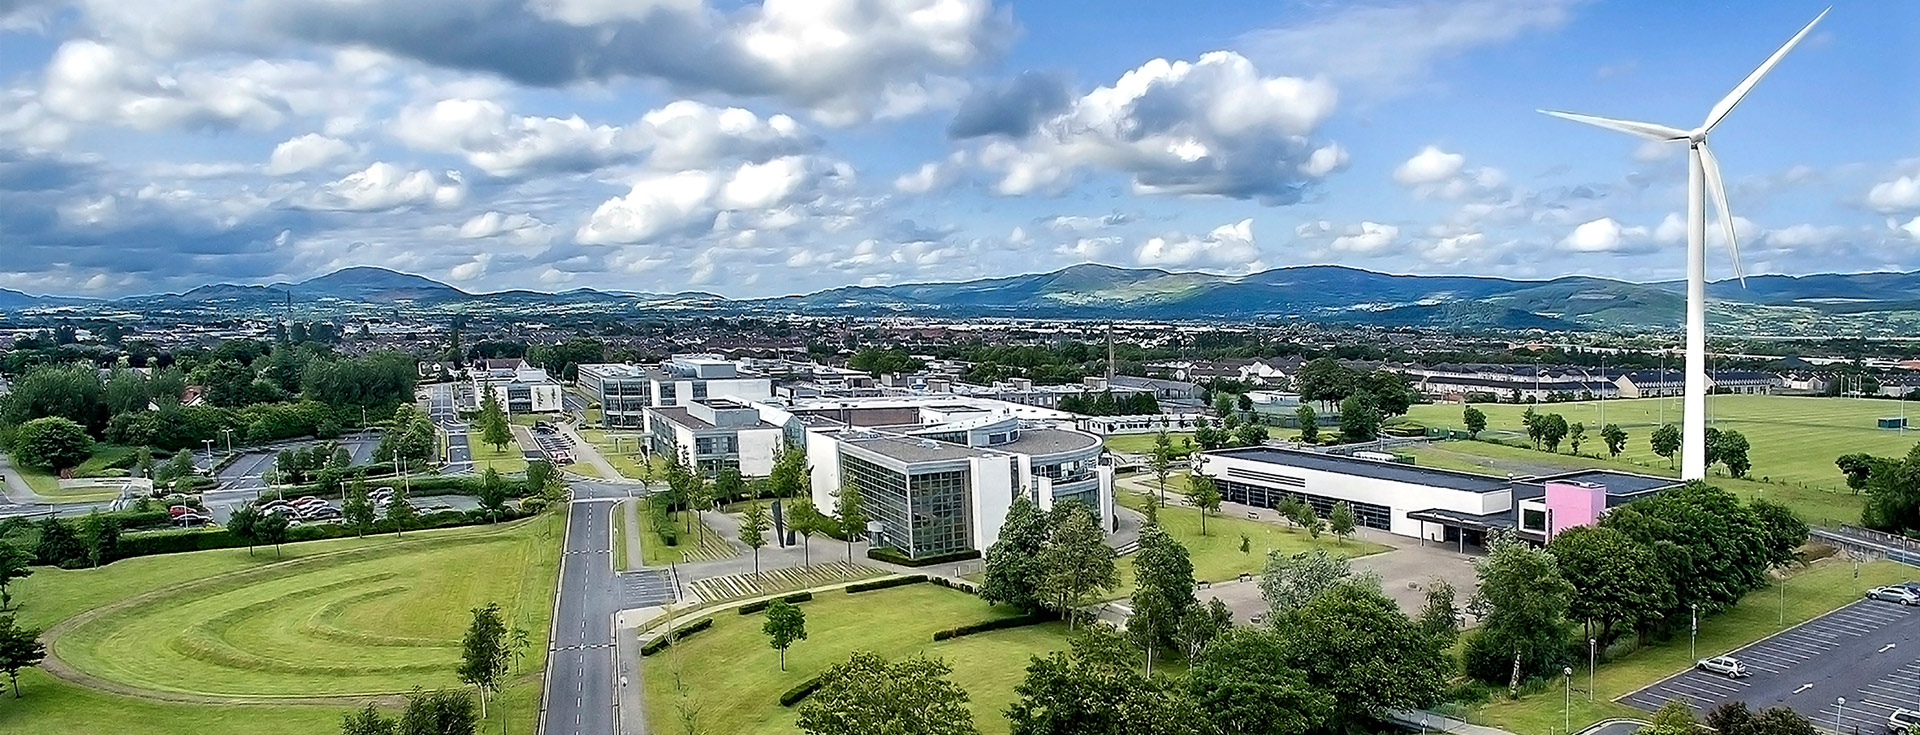 Dundalk Institute of Technology (İrlanda)